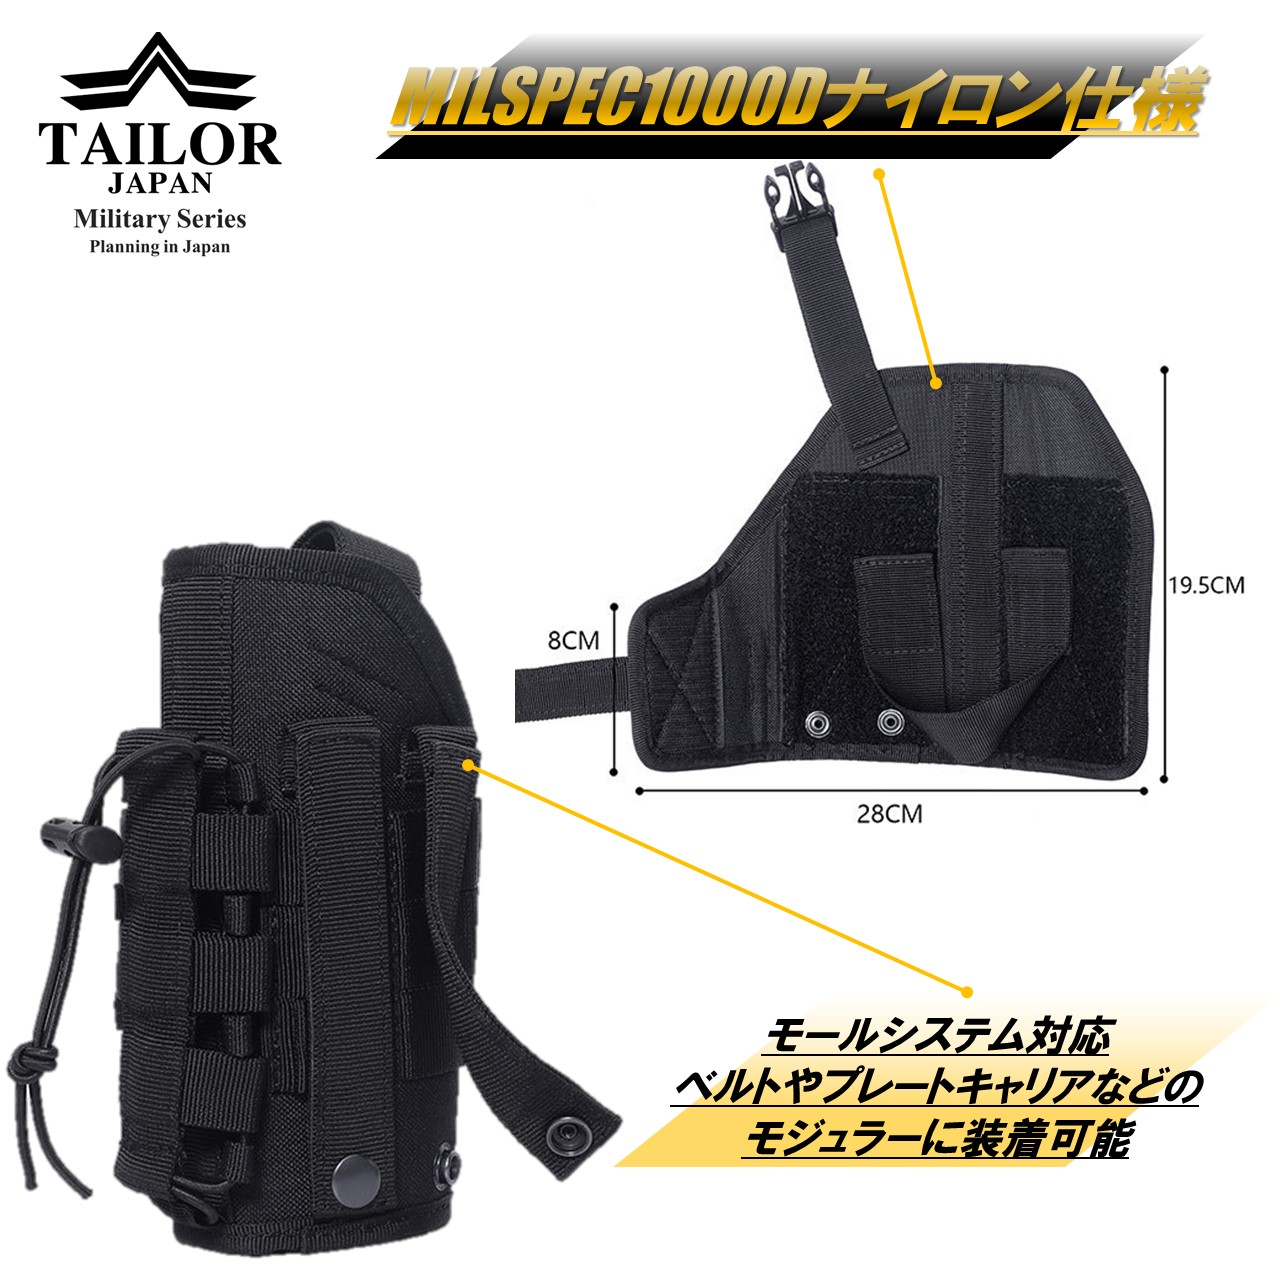 TAILOR JAPAN Taylor Japan hand gun ho ru Star airsoft universal ho ru Star right profit . for 